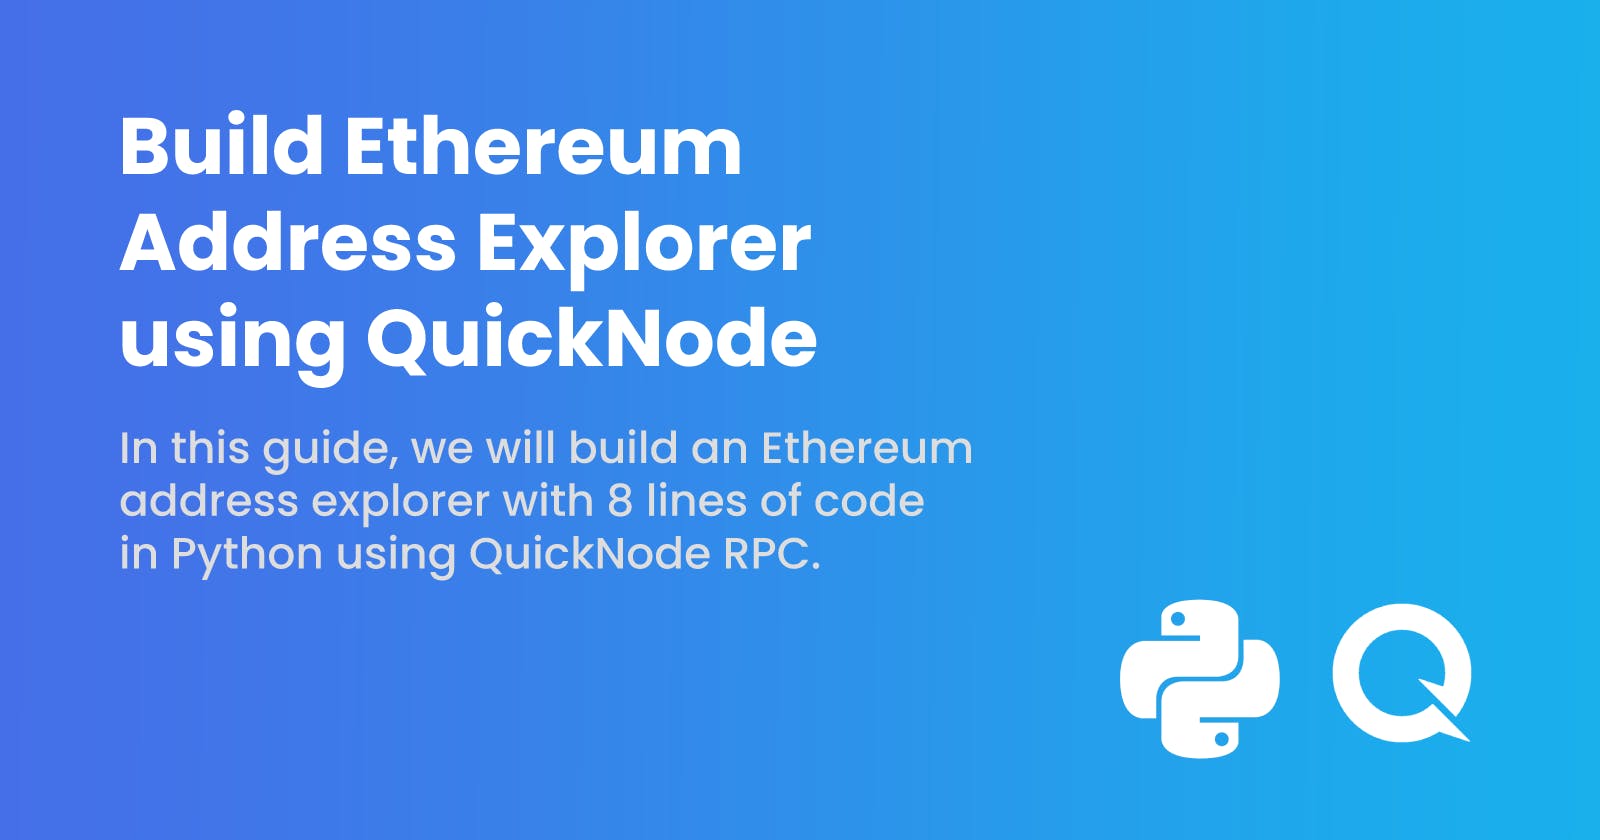 Build Ethereum Address Explorer using QuickNode